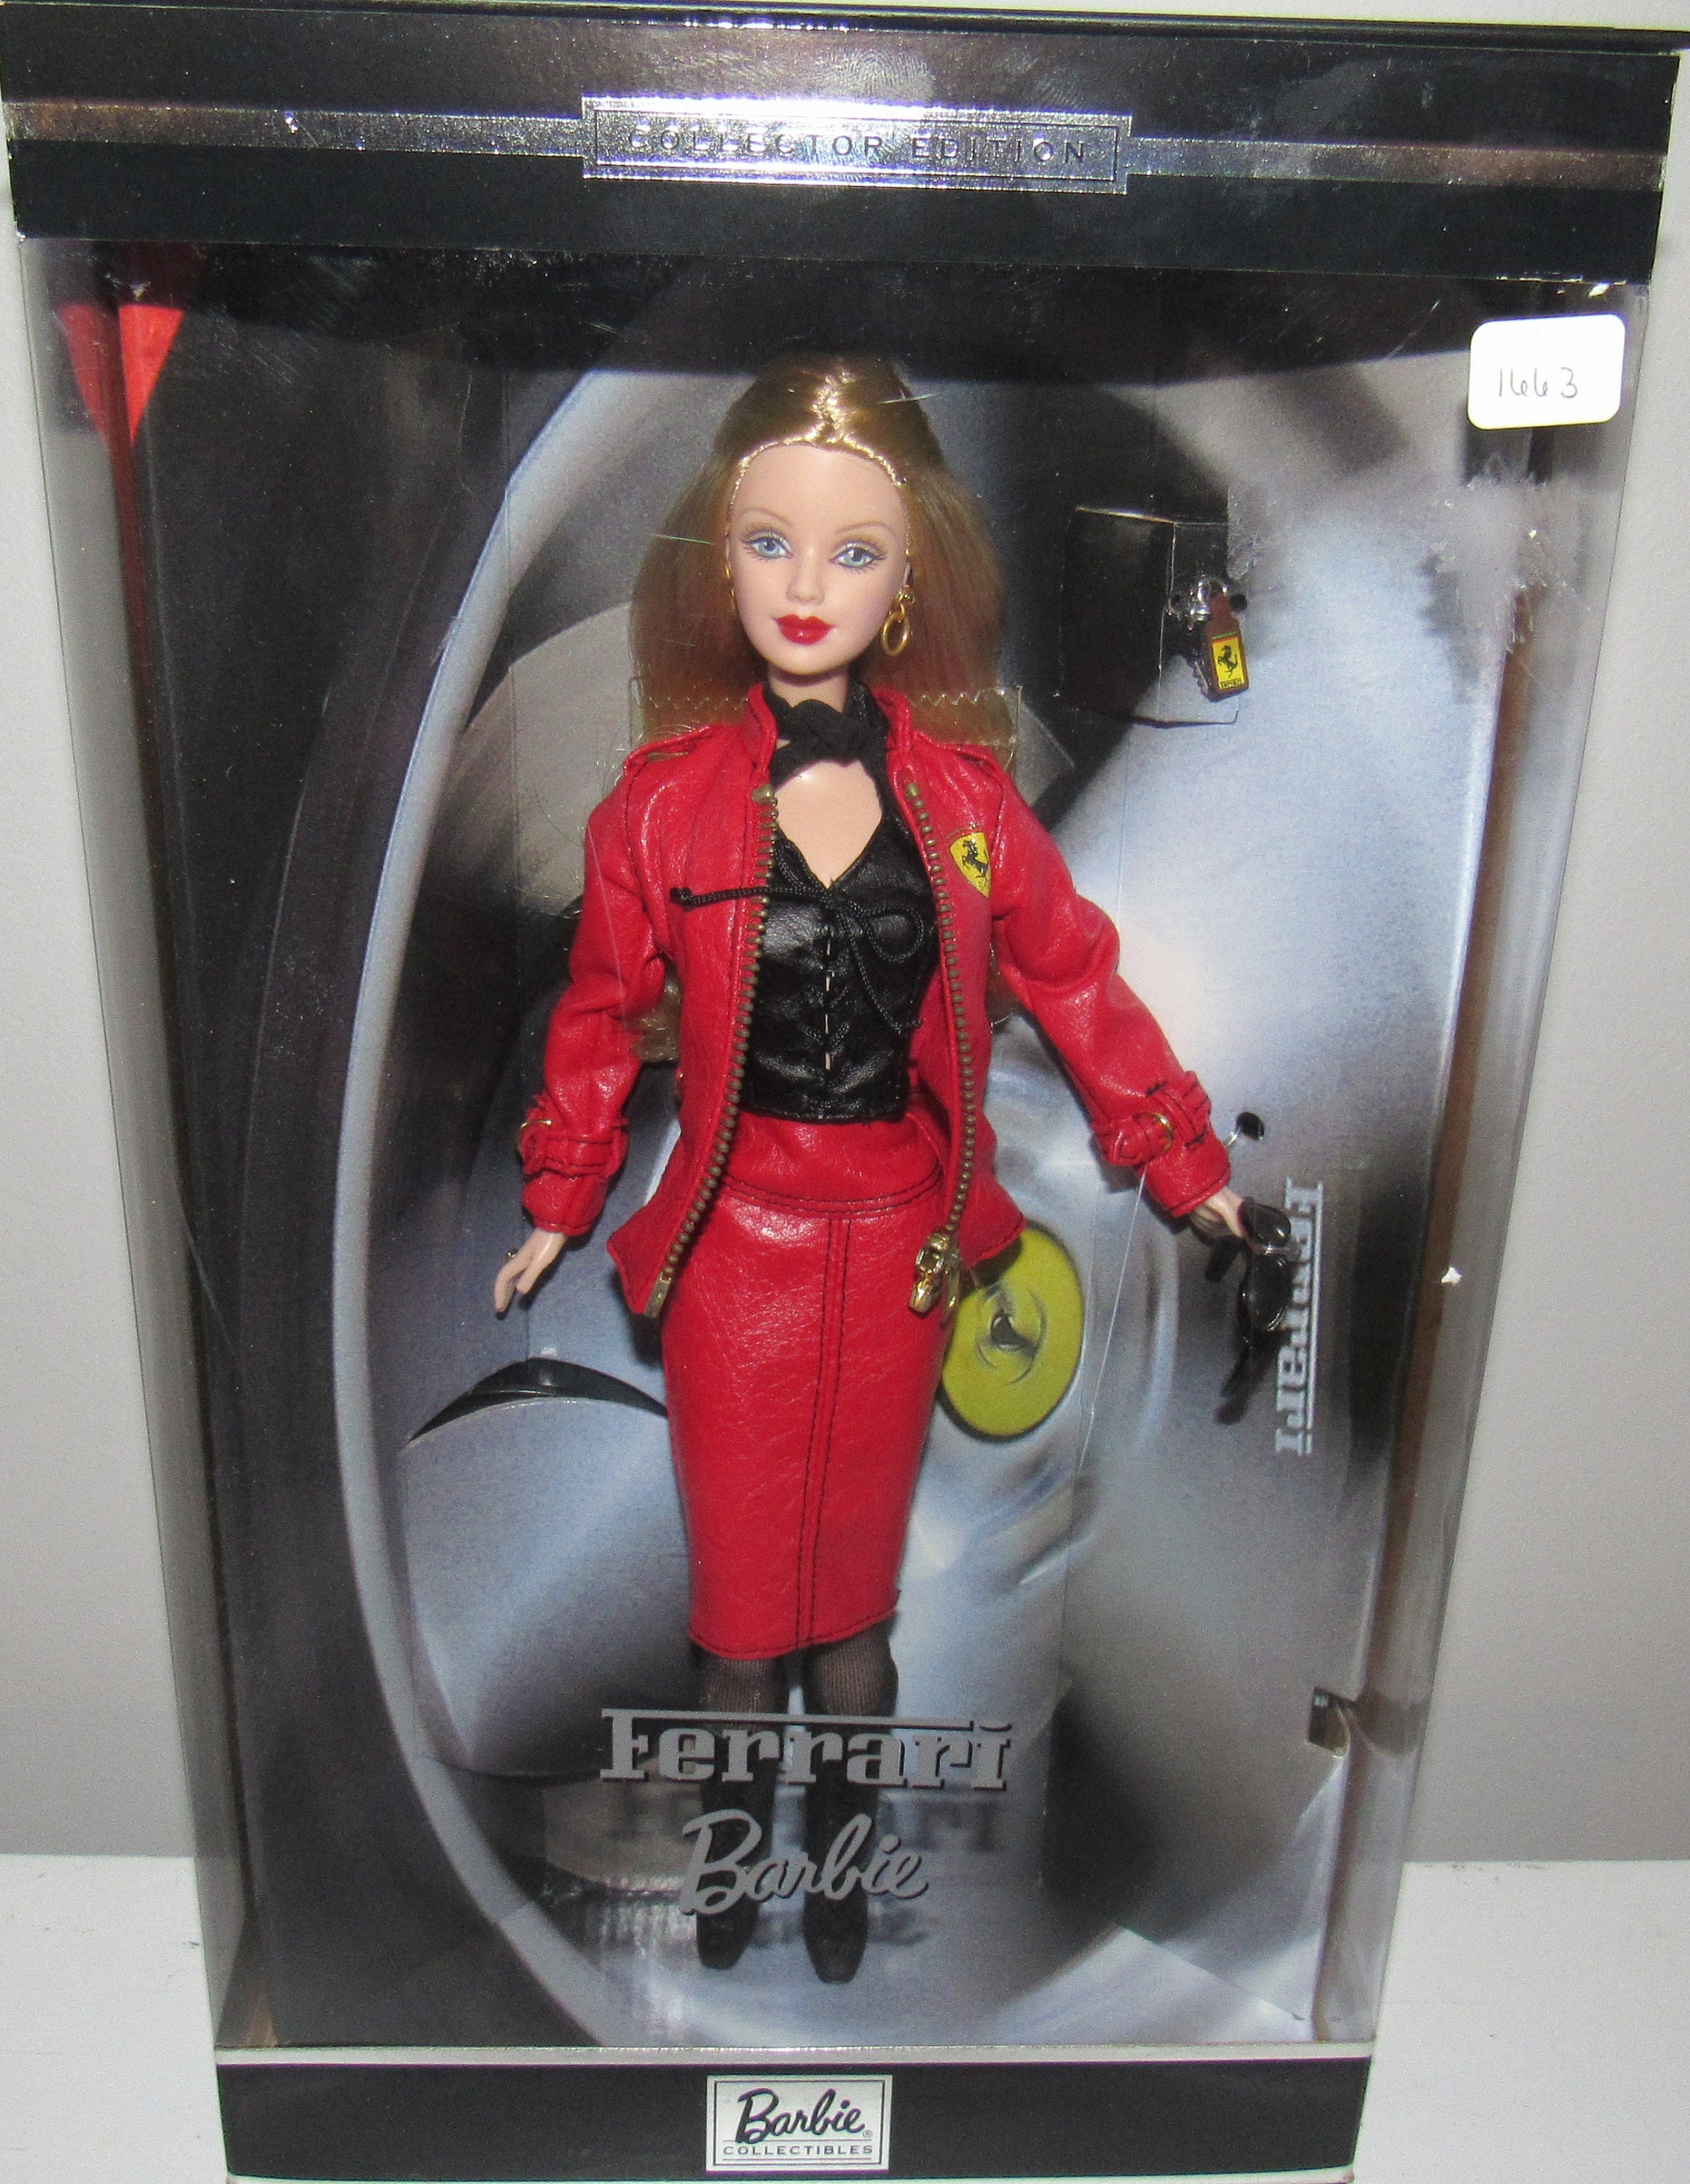 MIB Beautiful ferrari Barbie 2000 - Etsy